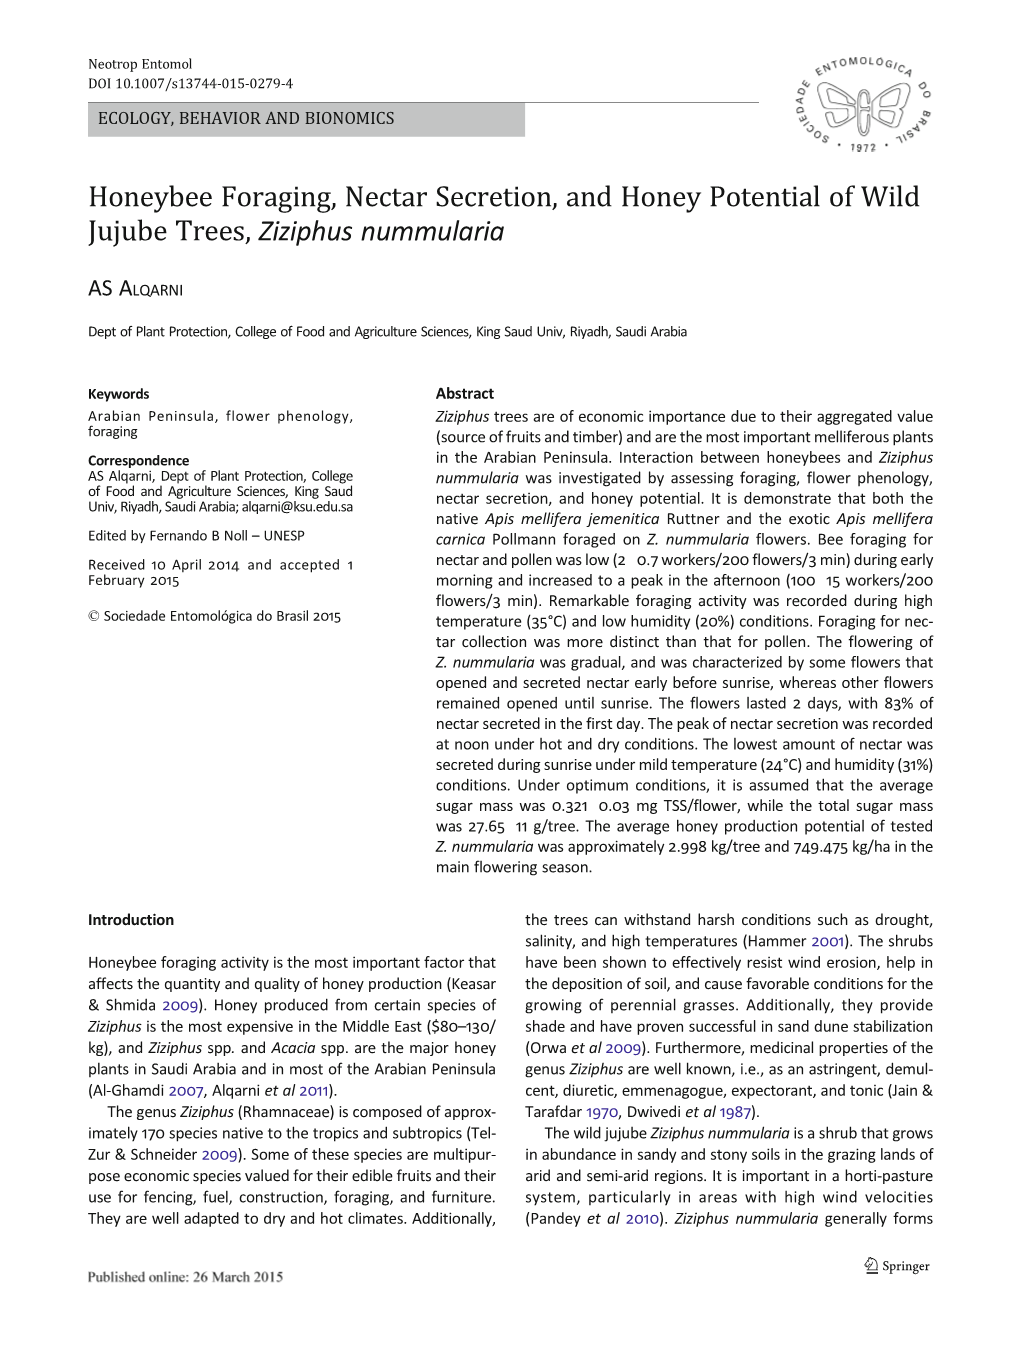 Honeybee Foraging, Nectar Secretion, and Honey Potential of Wild Jujube Trees, Ziziphus Nummularia